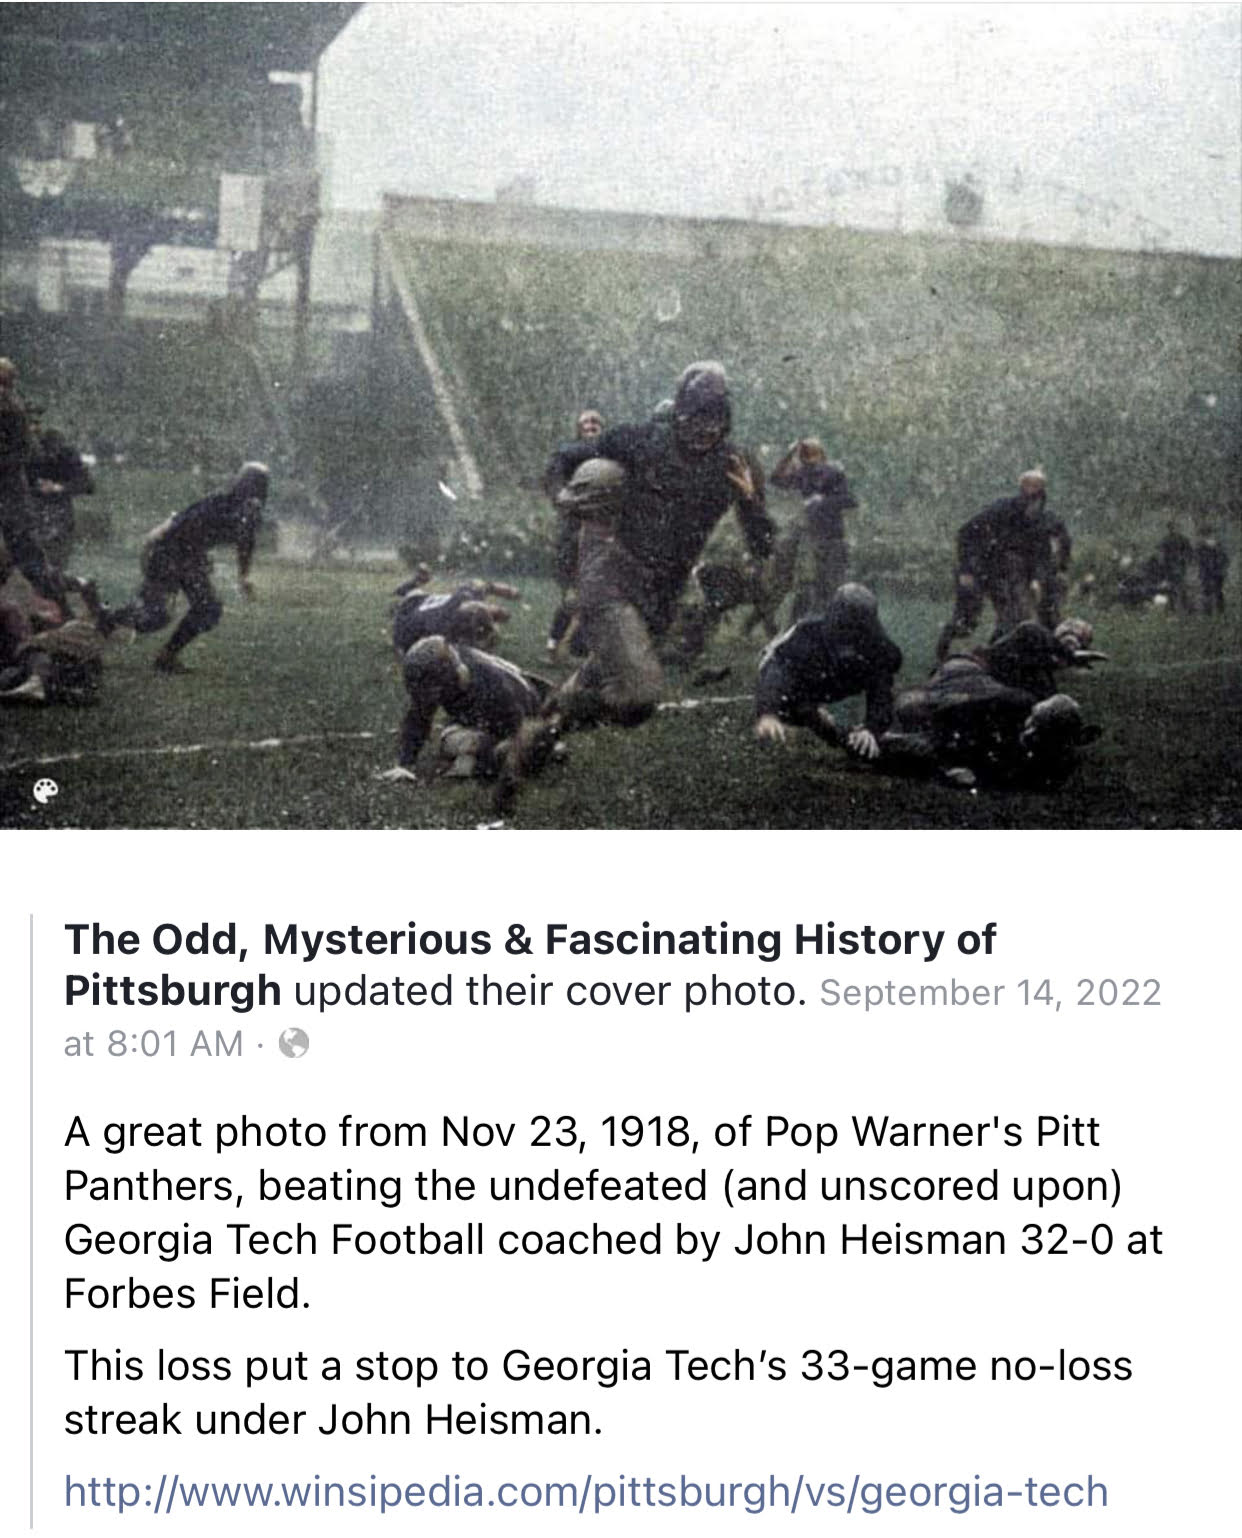 Football play at Forbes Field, 1918, with Georgia Tech's John Heisman's team vs. Pop Warner's Pitt Panthers.